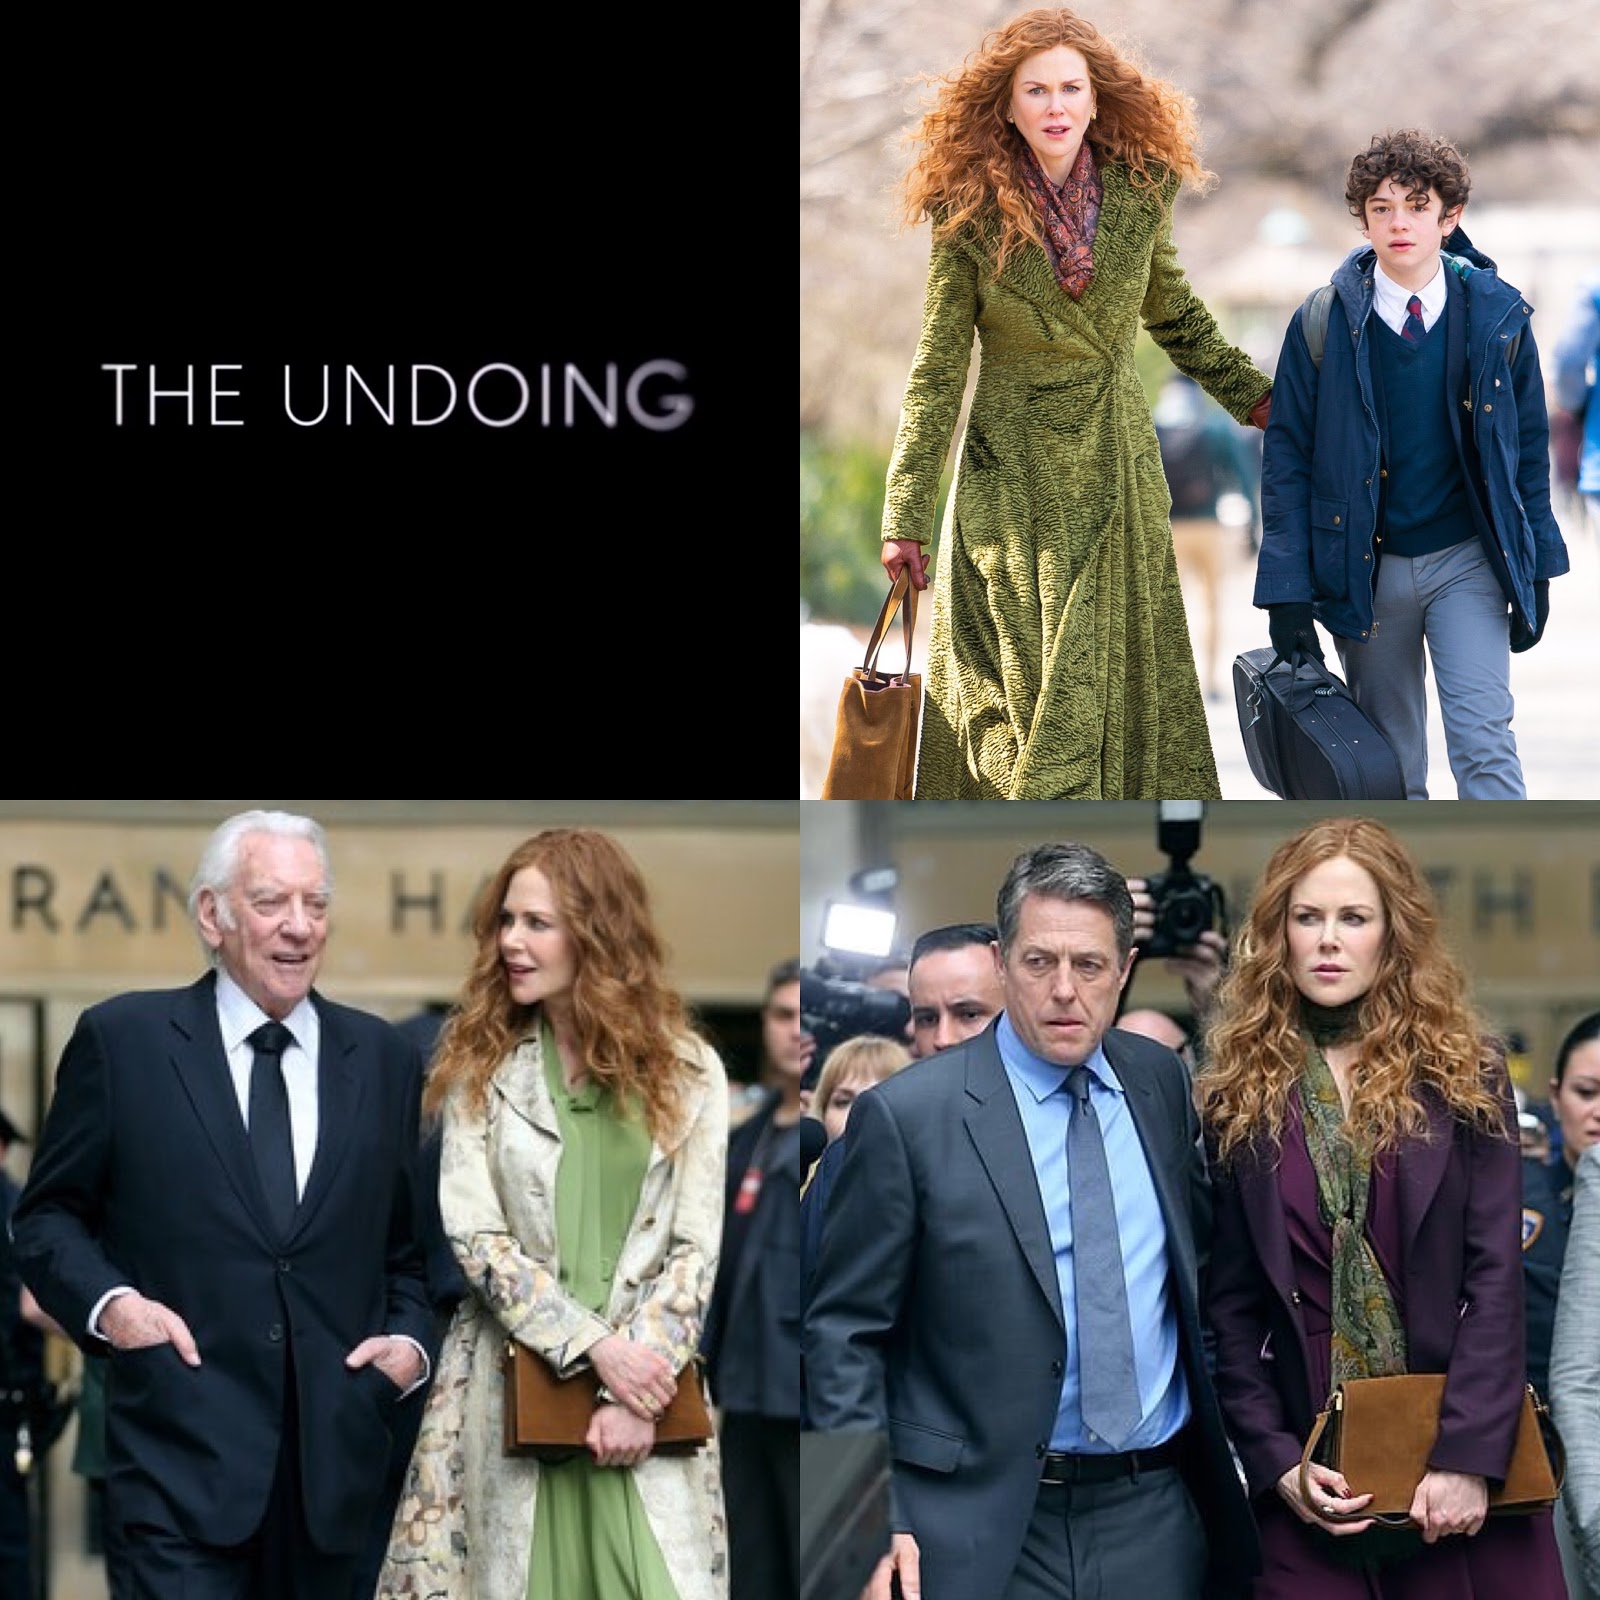 The Undoing: Official Teaser